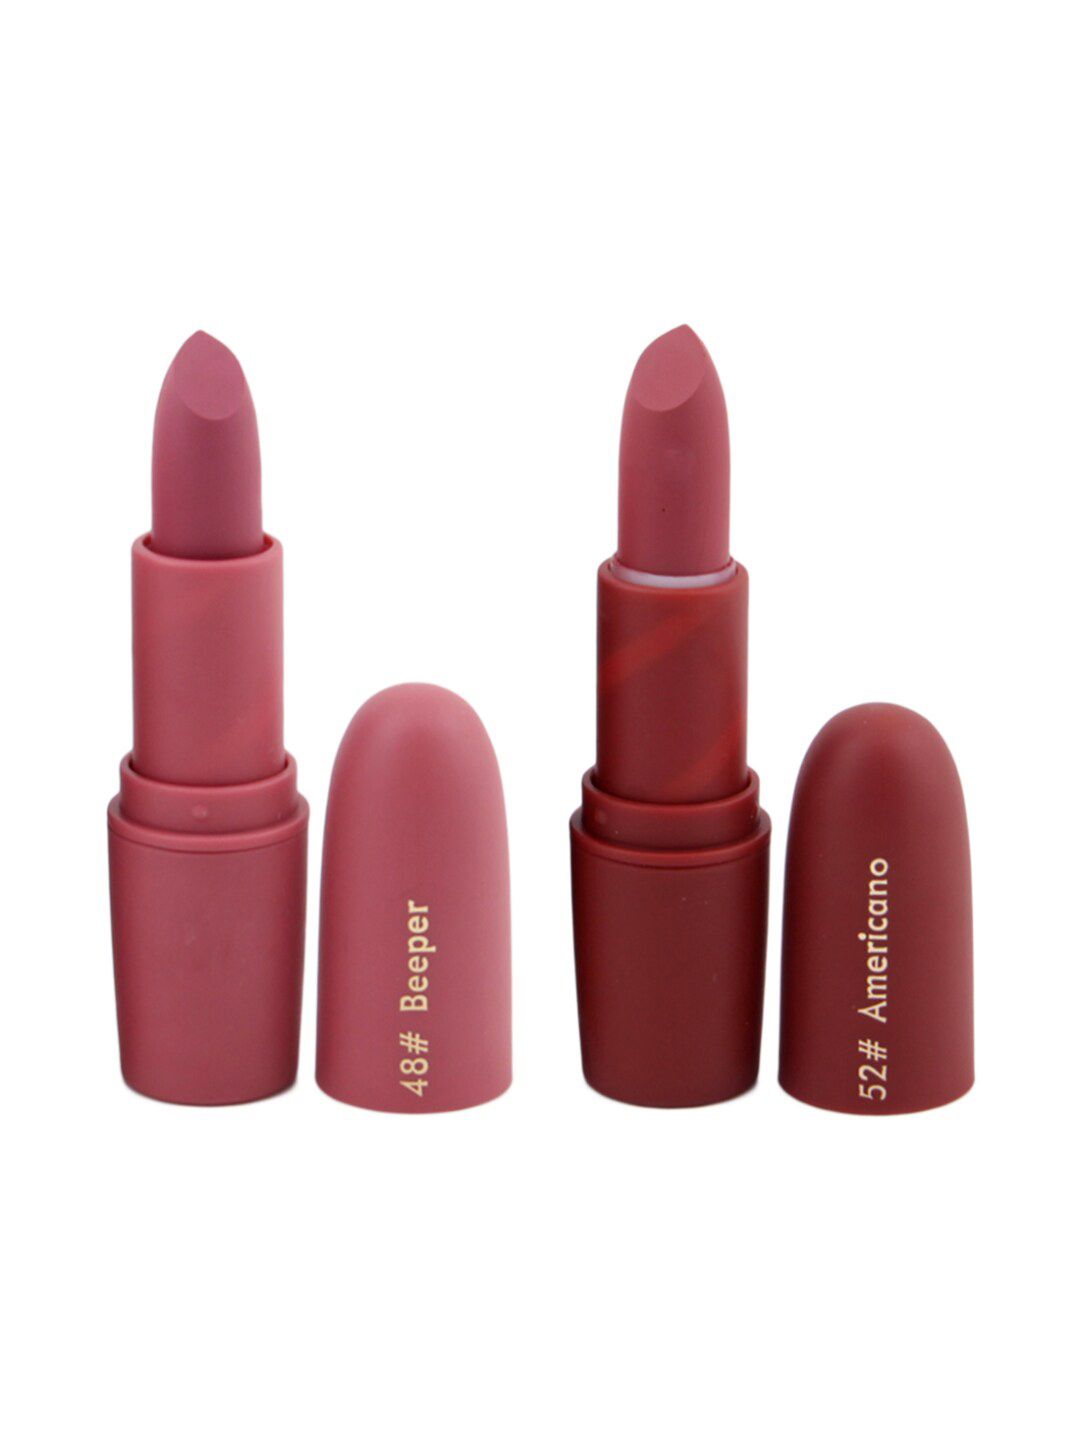 MISS ROSE Professional Make-Up Set of 2 Matte Creamy Lipsticks - Beeper 48 & Americano 52 Price in India